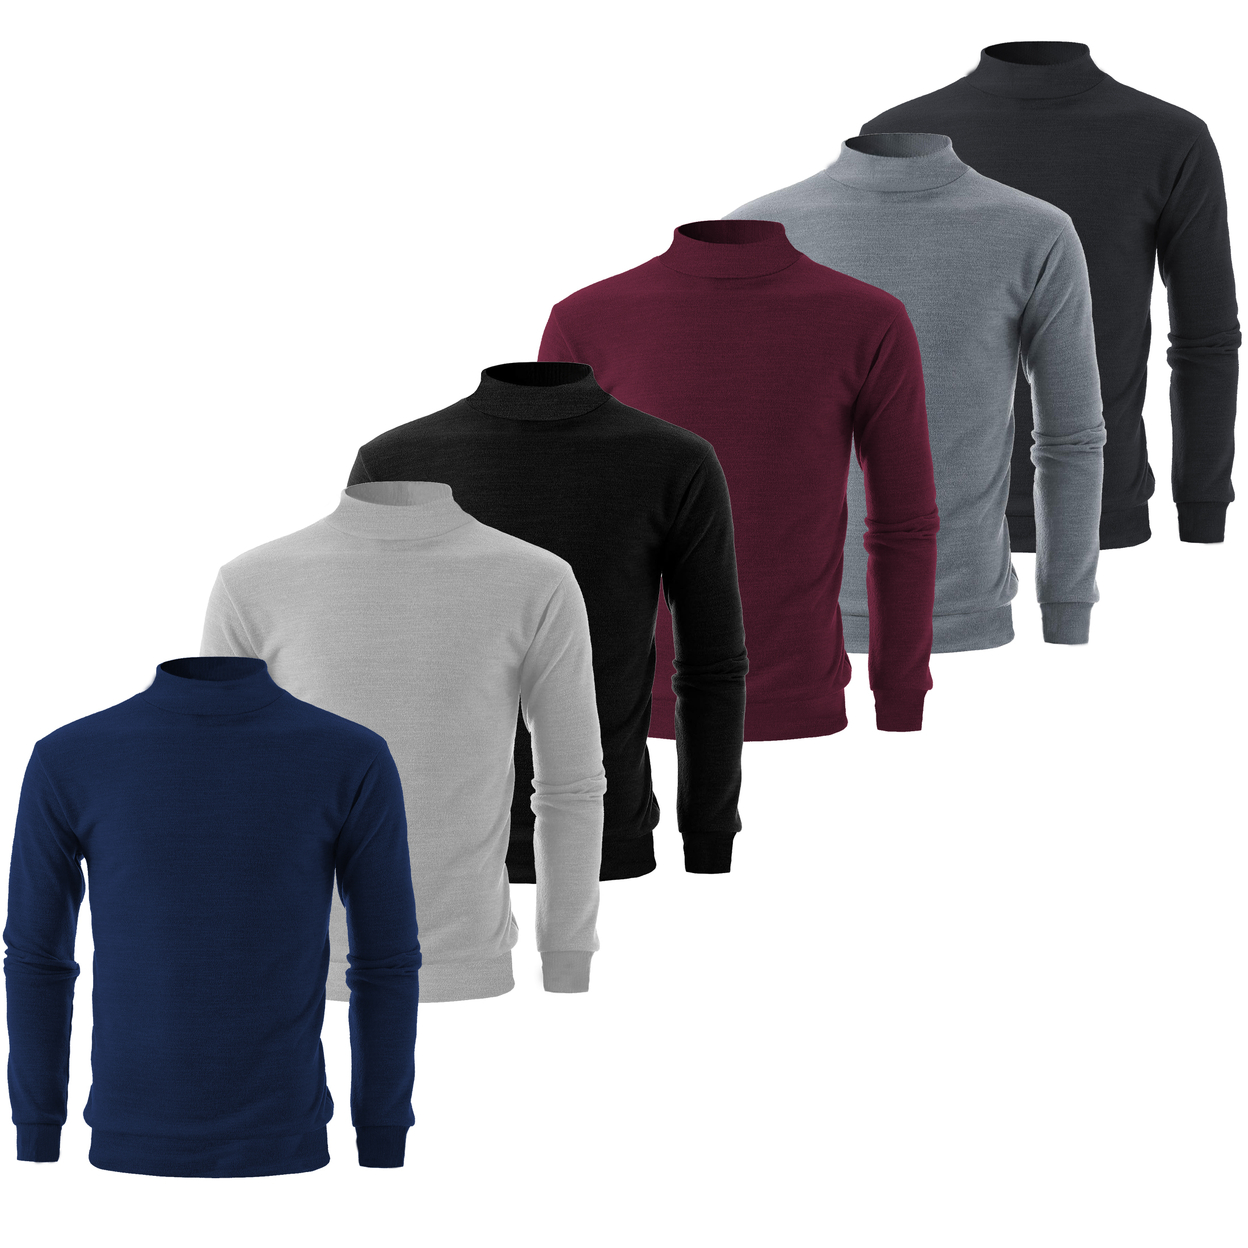 3-Pack: Men's Winter Warm Cozy Knit Slim Fit Mock Neck Sweater - Xx-large